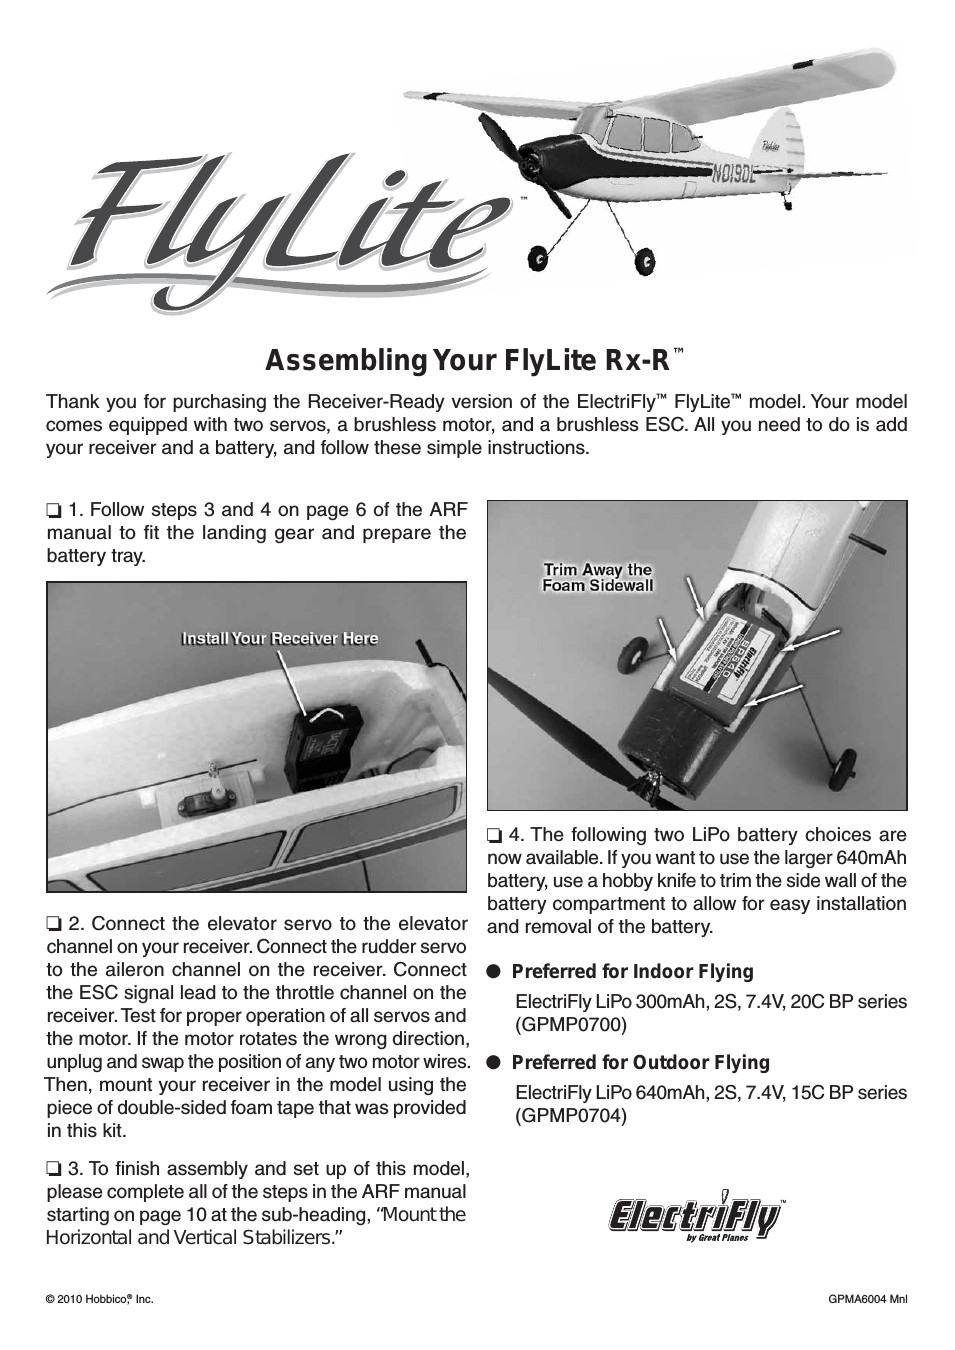 FlyLite EP Slow Flyer Rx-R - GPMA6004